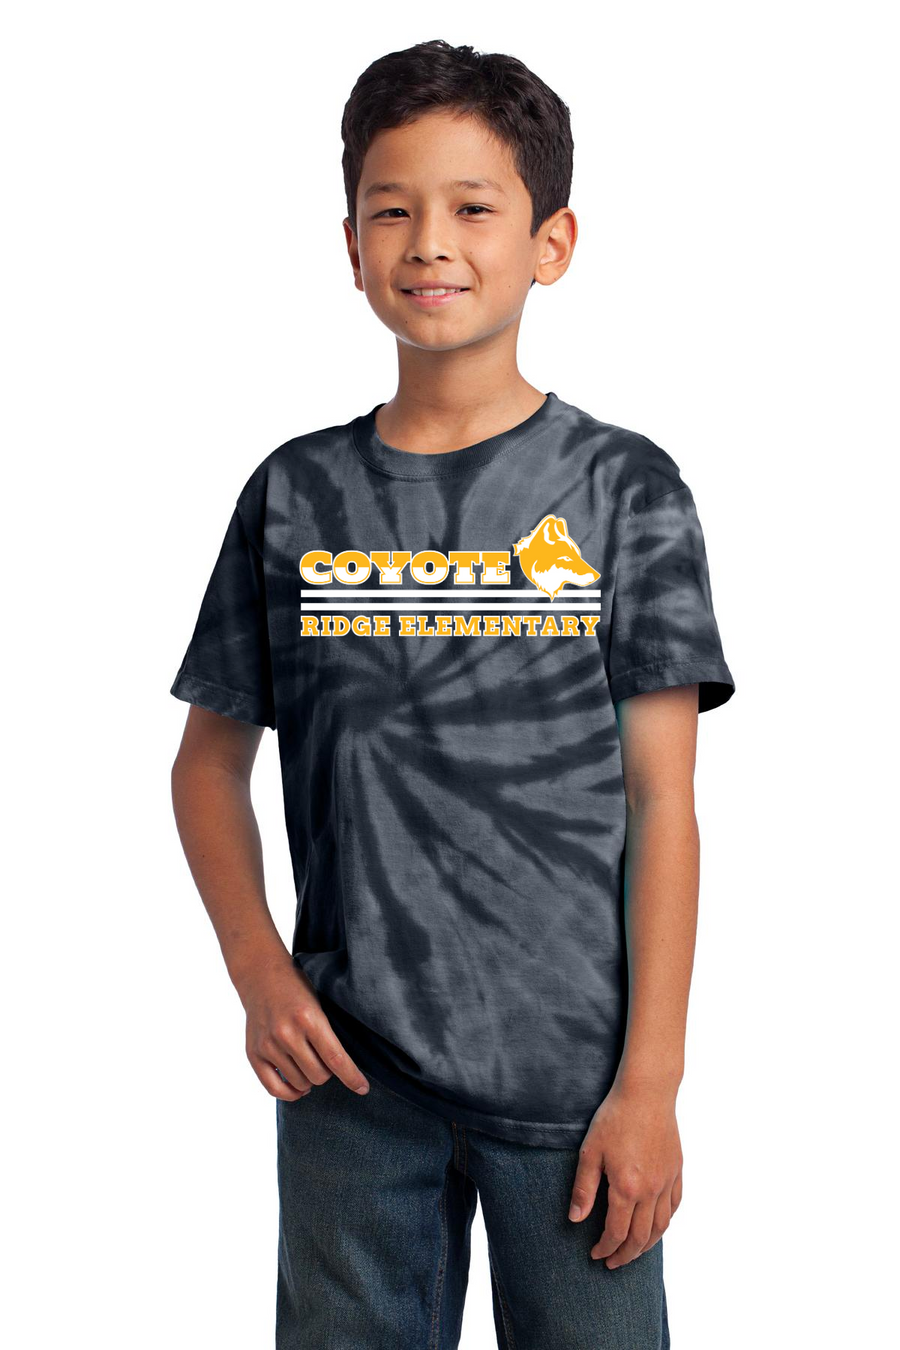 Coyote Ridge Elementary-Unisex Tie-Dye Shirt